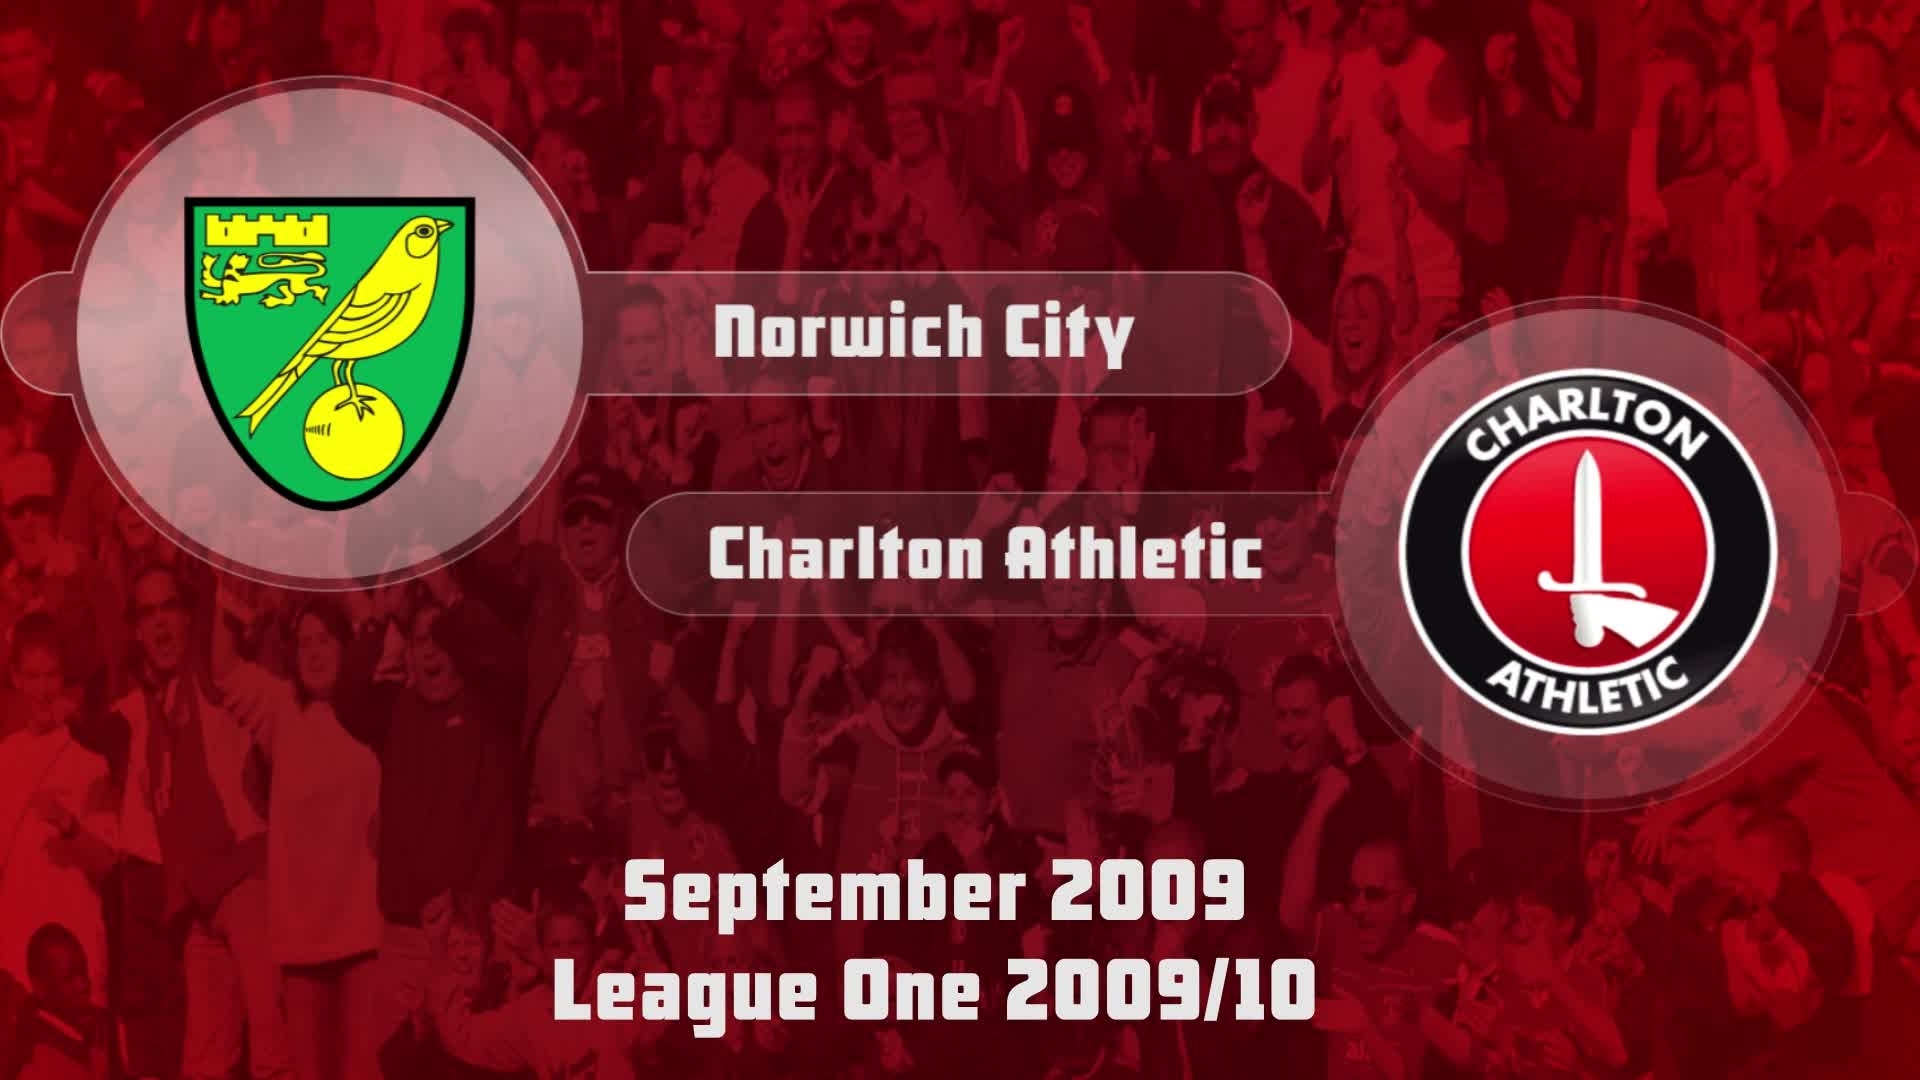 09 HIGHLIGHTS | Noriwch 2 Charlton 2 (Sept 2009)